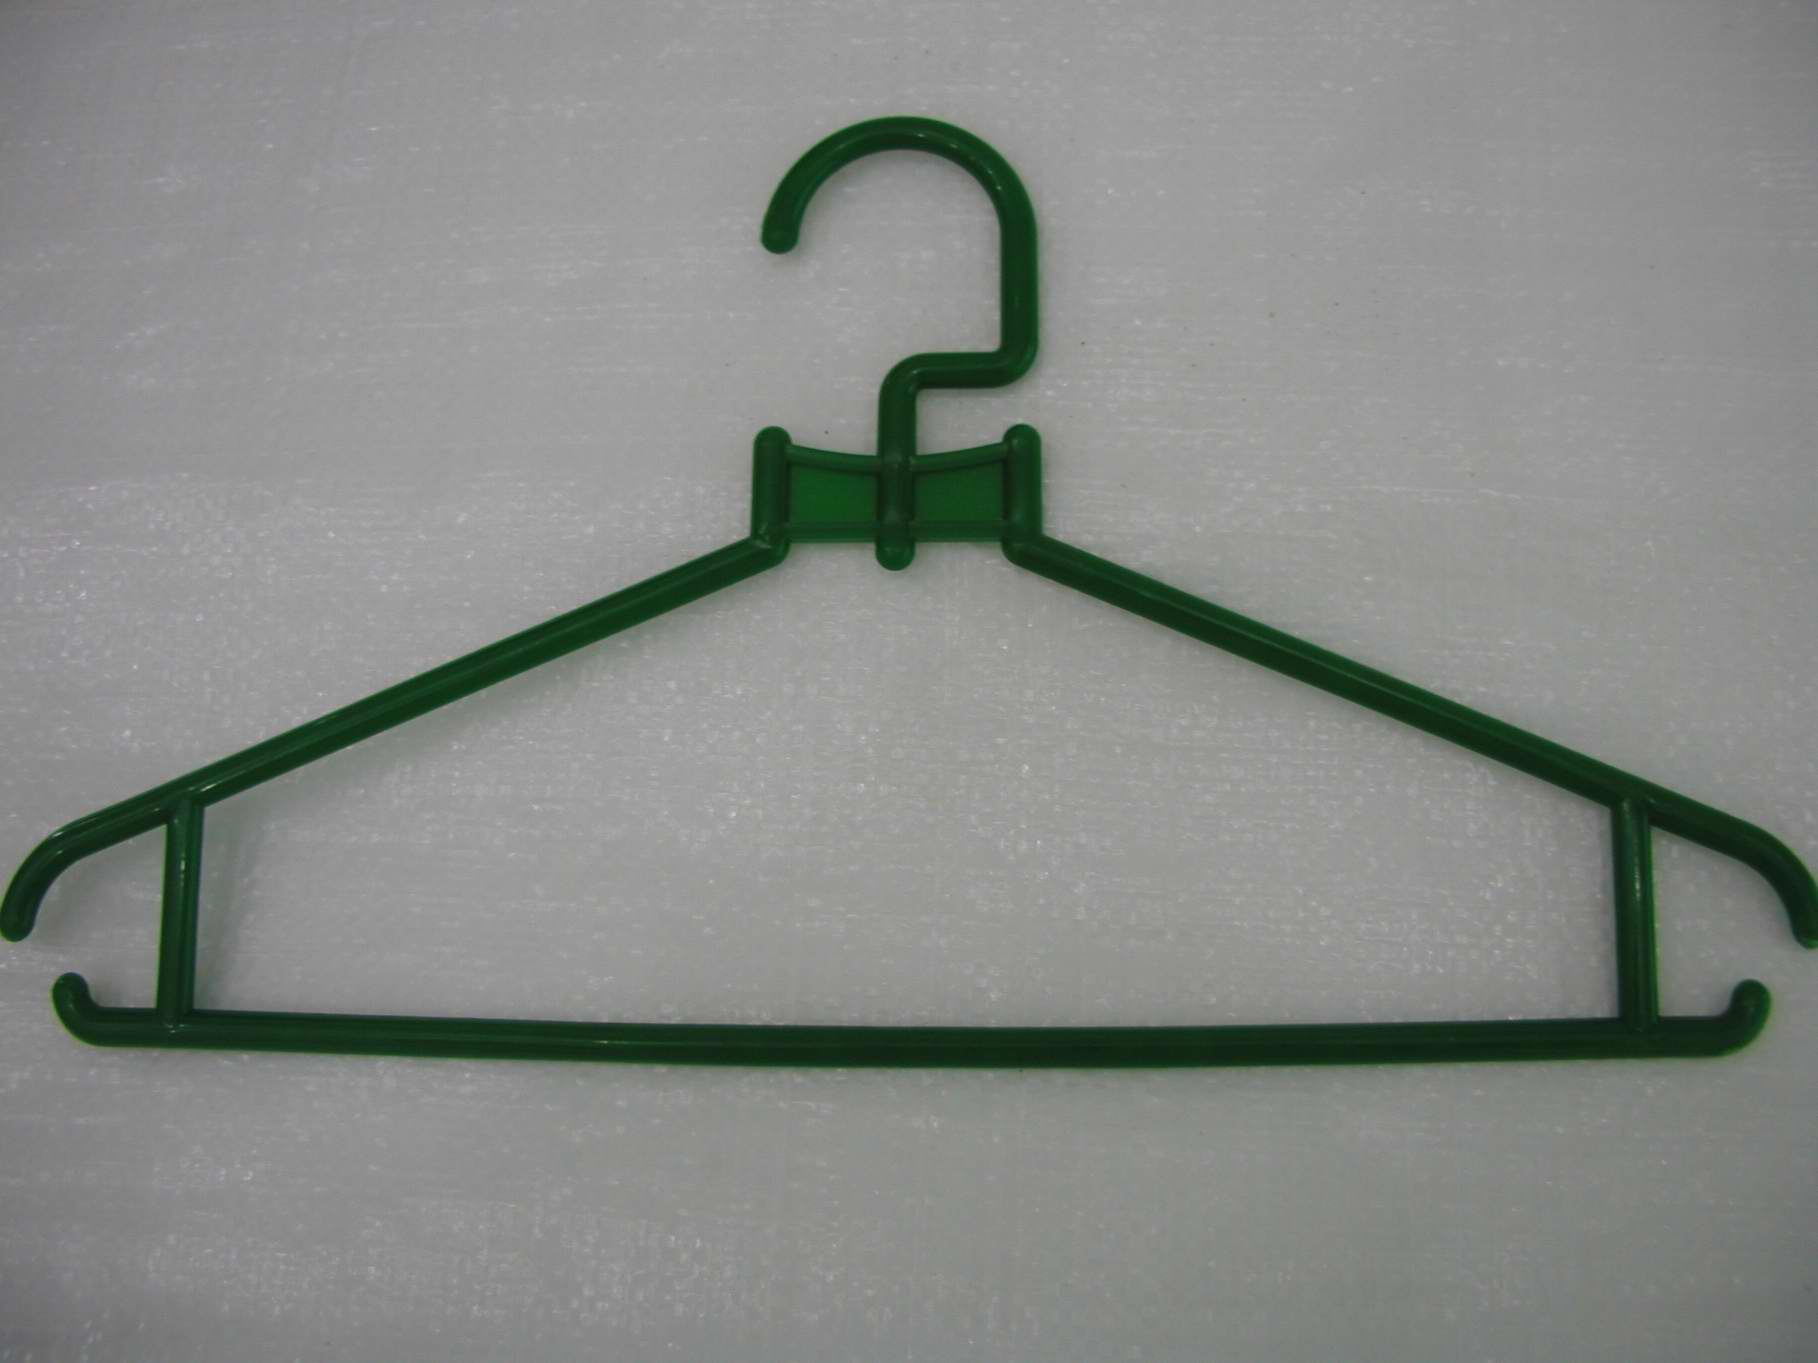  Plastic Hanger